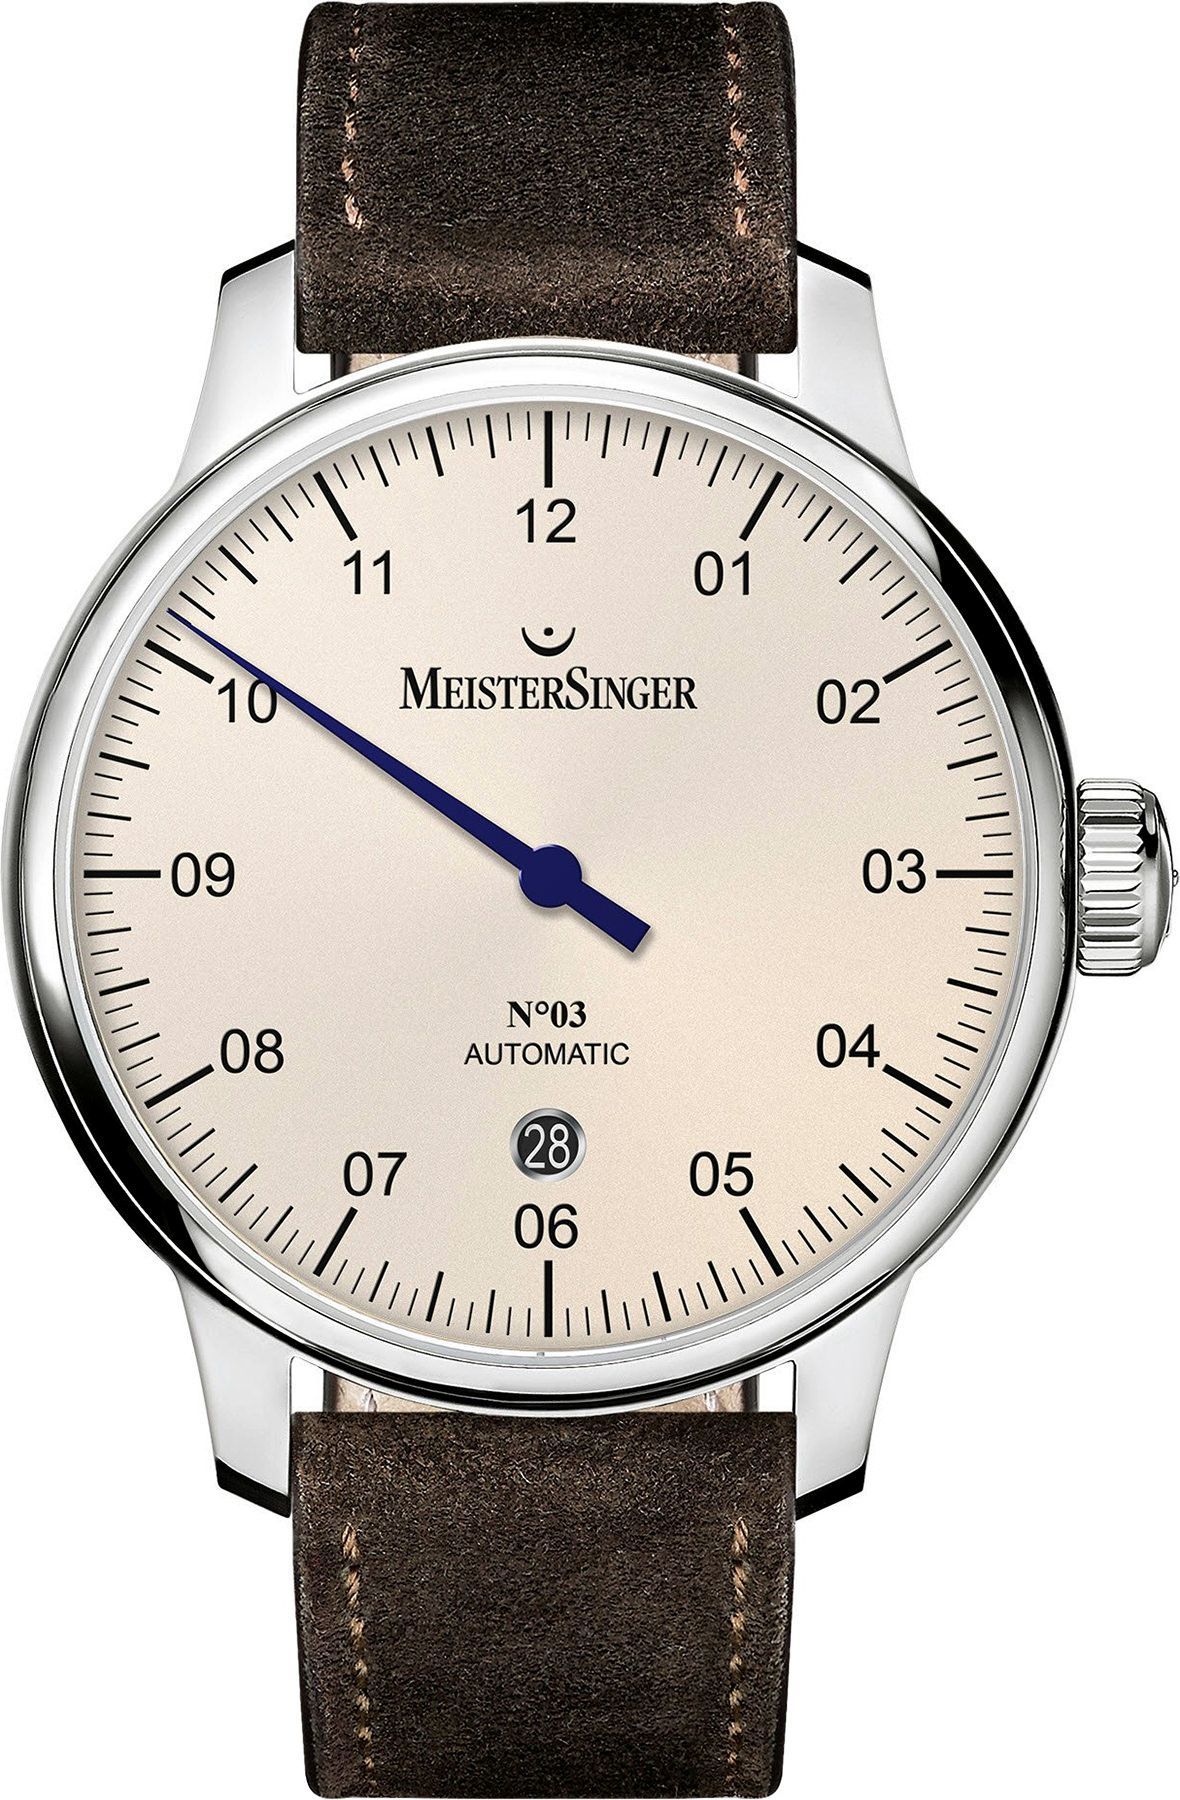 MeisterSinger N°03 40 mm Watch in Ivory Dial For Men - 1